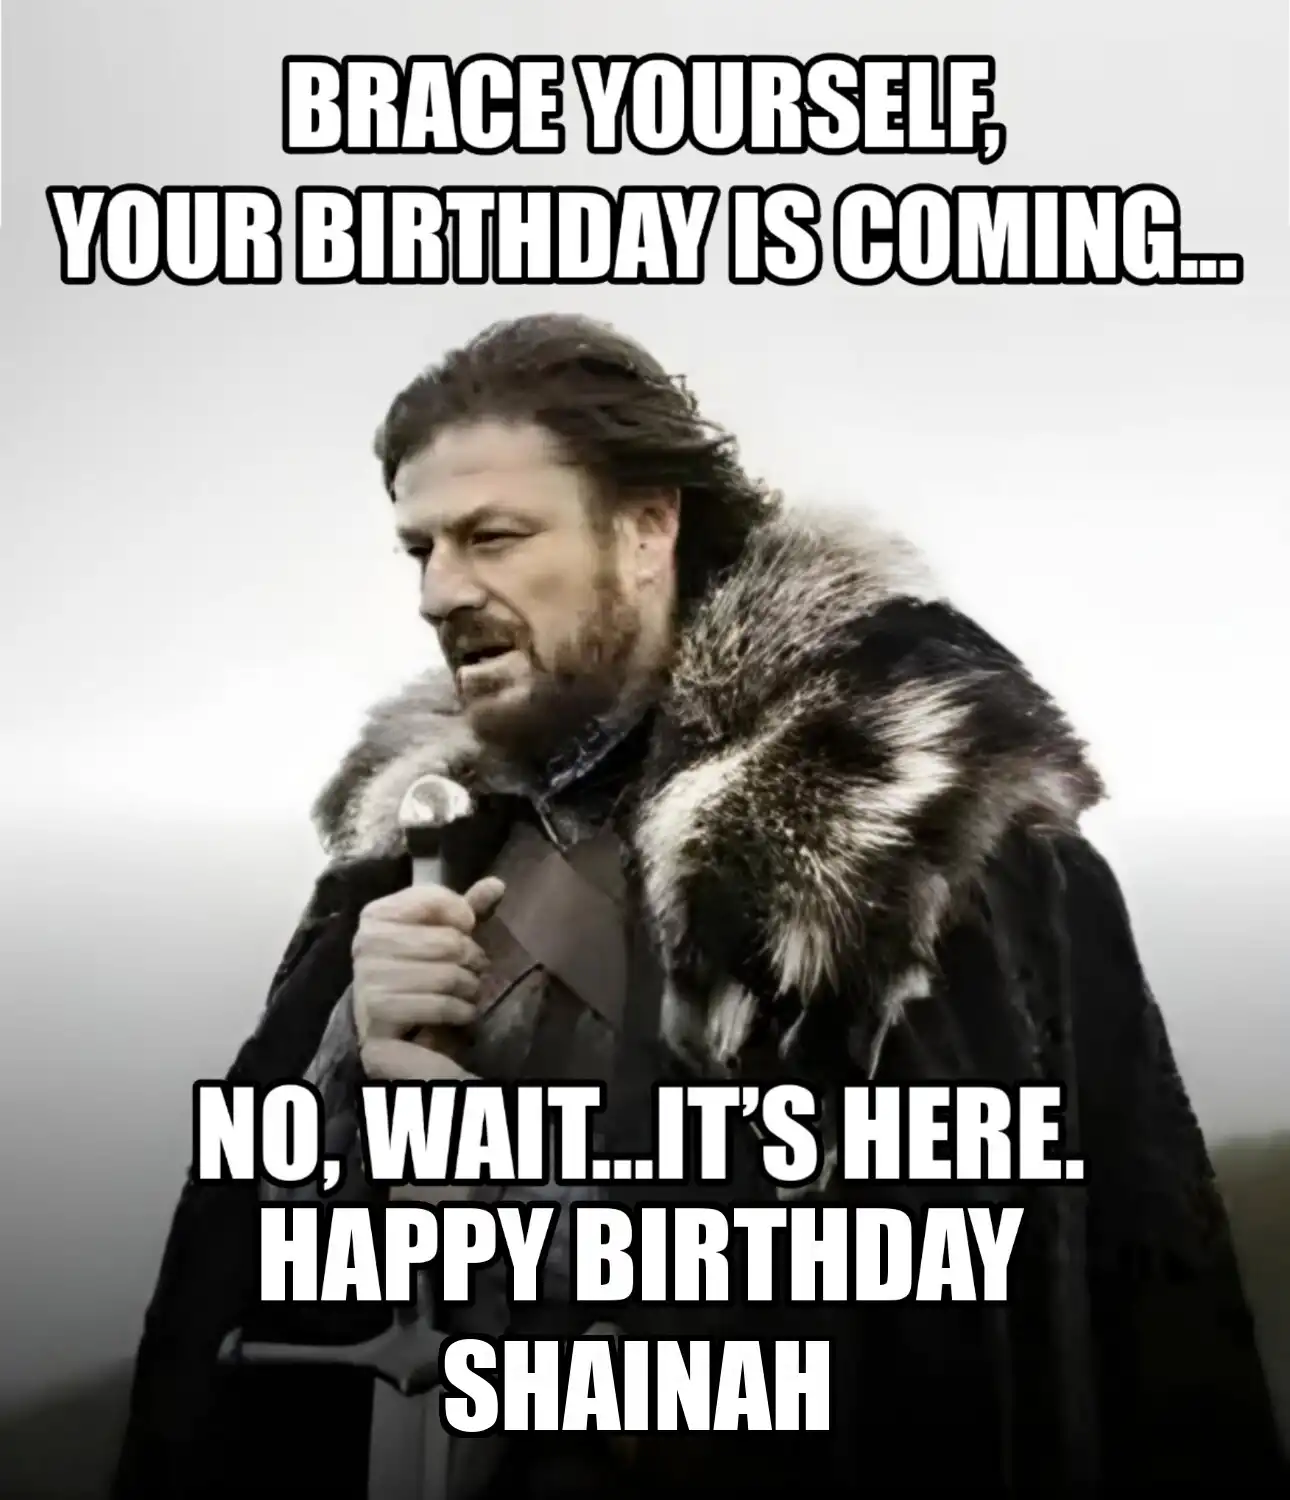 Happy Birthday Shainah Brace Yourself Your Birthday Is Coming Meme